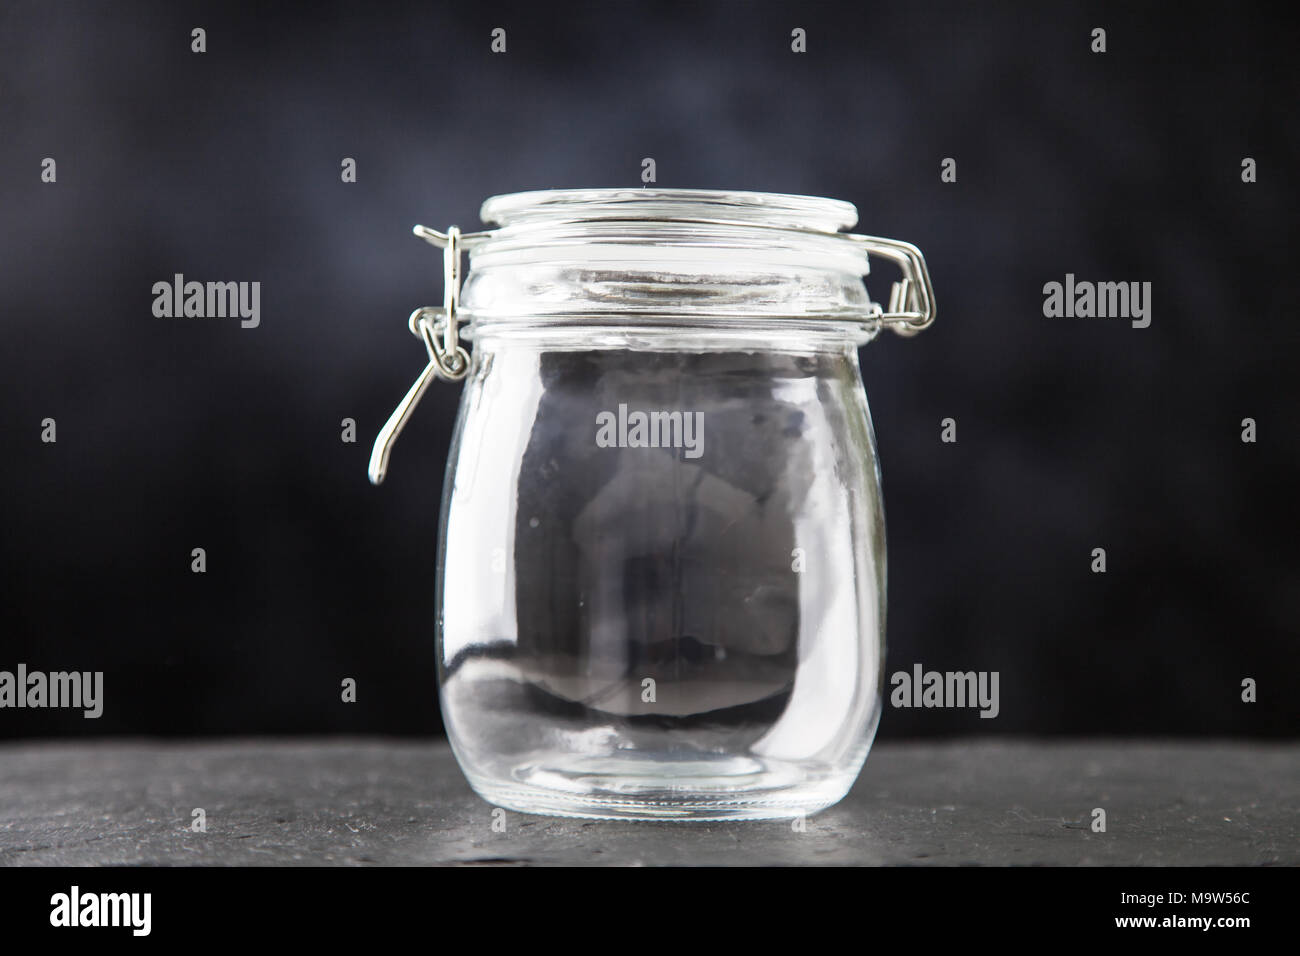 Glass jar on dark background Stock Photo